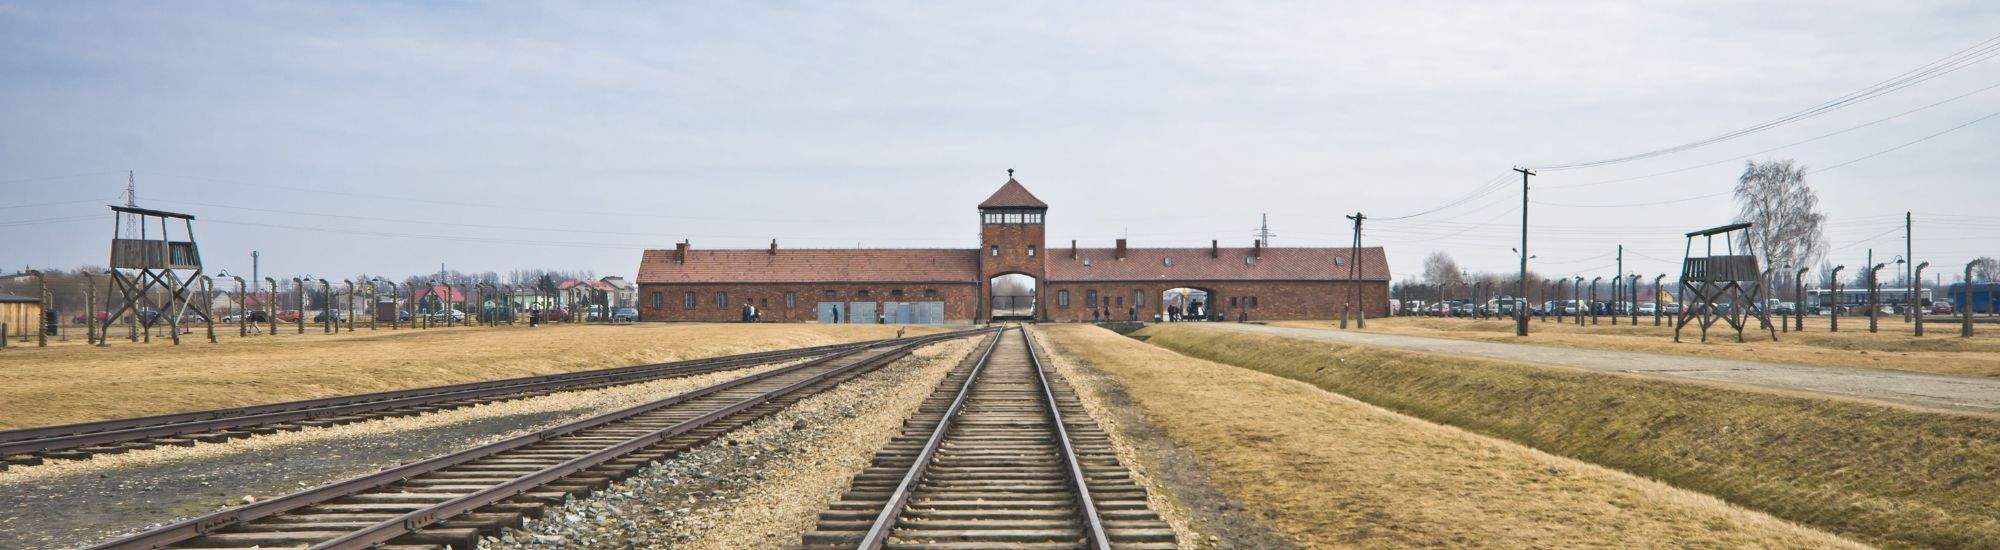 USA Supports Virtual Tour of Auschwitz-Birkenau